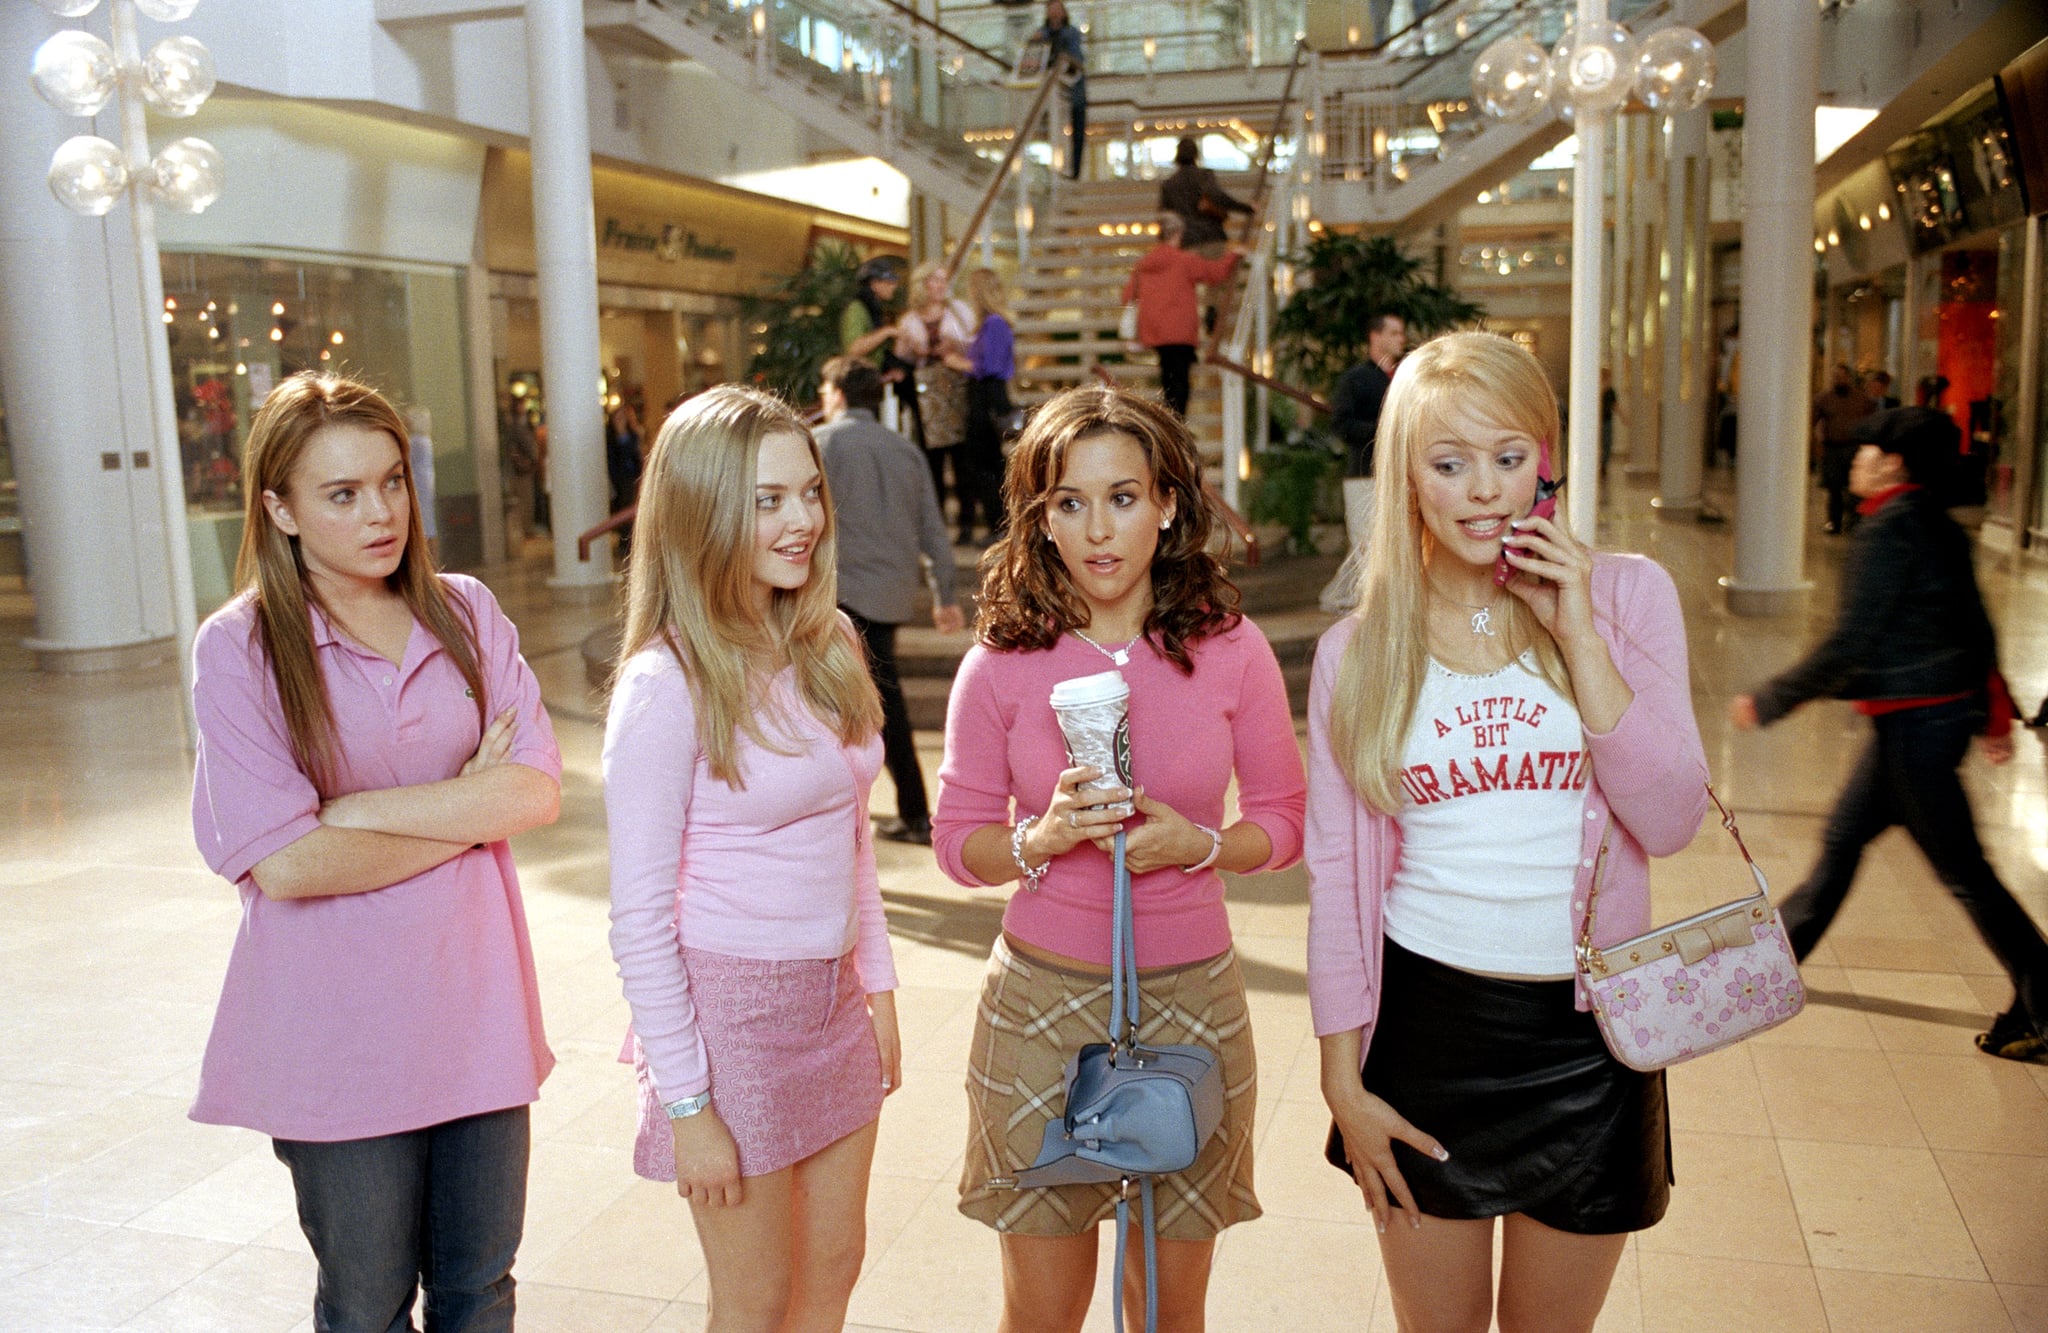 Mean Girls mall scene